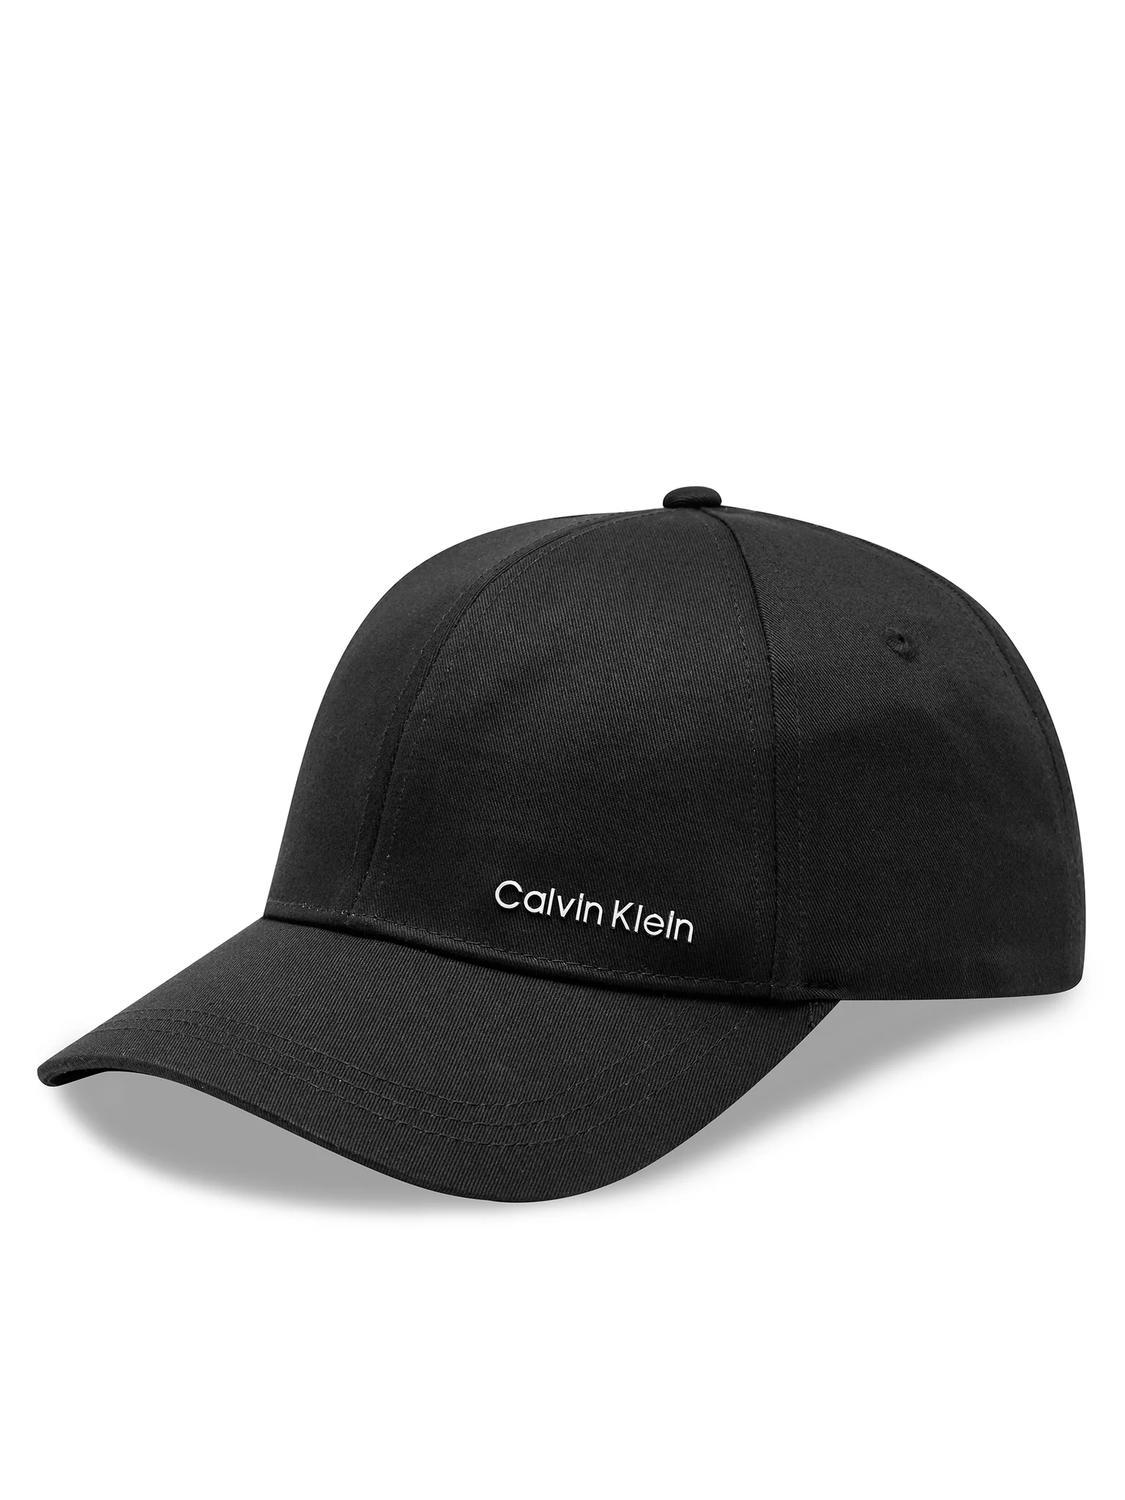 Calvin Klein Metal Lettering Black Outlet Ck Baseball Hat - Prices! At Bb Buy